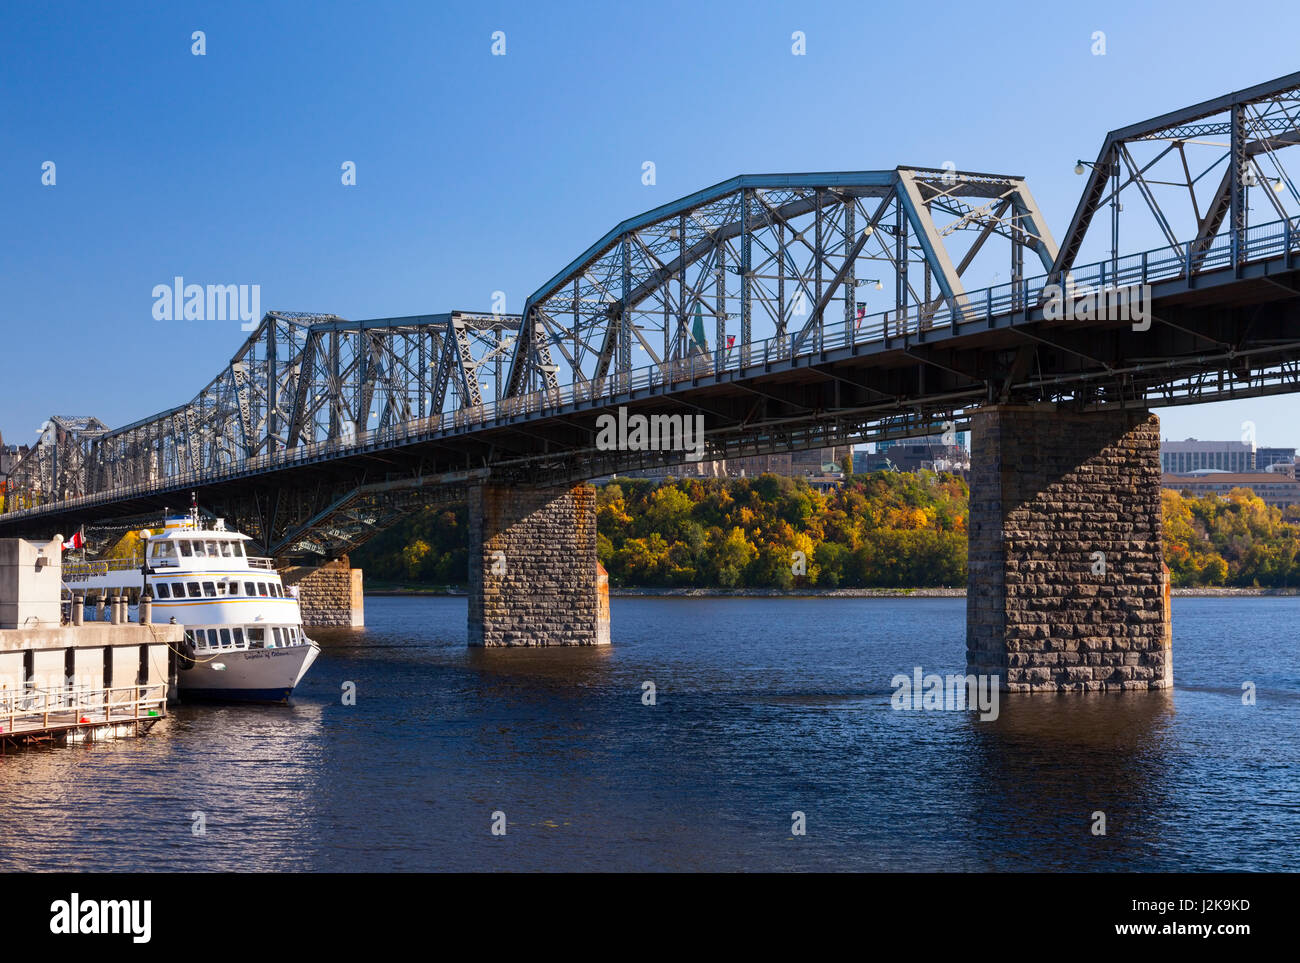 The Royal Alexandra Interprovincial Bridge (Alexandra Bridge) that crosses the Ottawa River to connect the provinces of Ontario and Quebec. Stock Photo